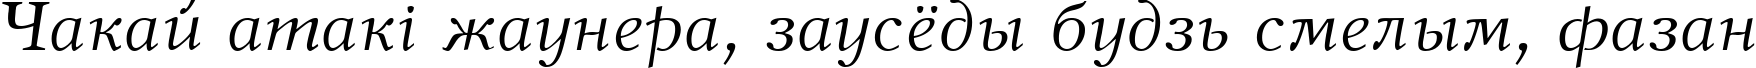 Пример написания шрифтом New Journal Italic:001.001 текста на белорусском